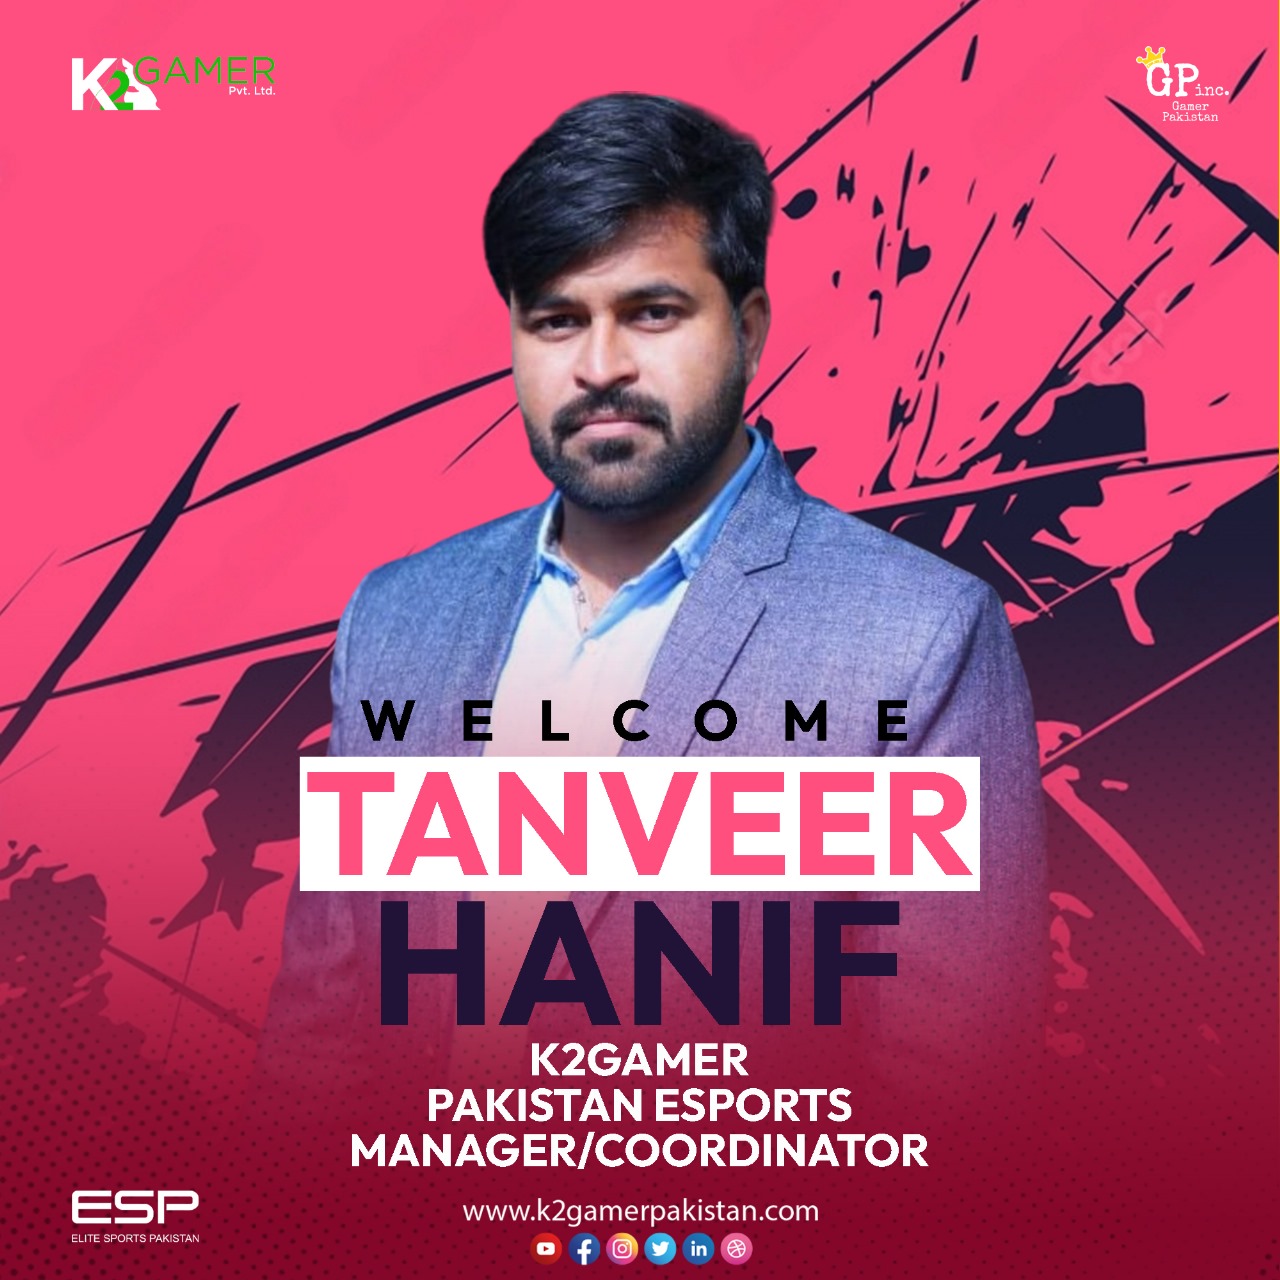 Welcome Tanveer Hanif to the K2 Gamer Pakistan.